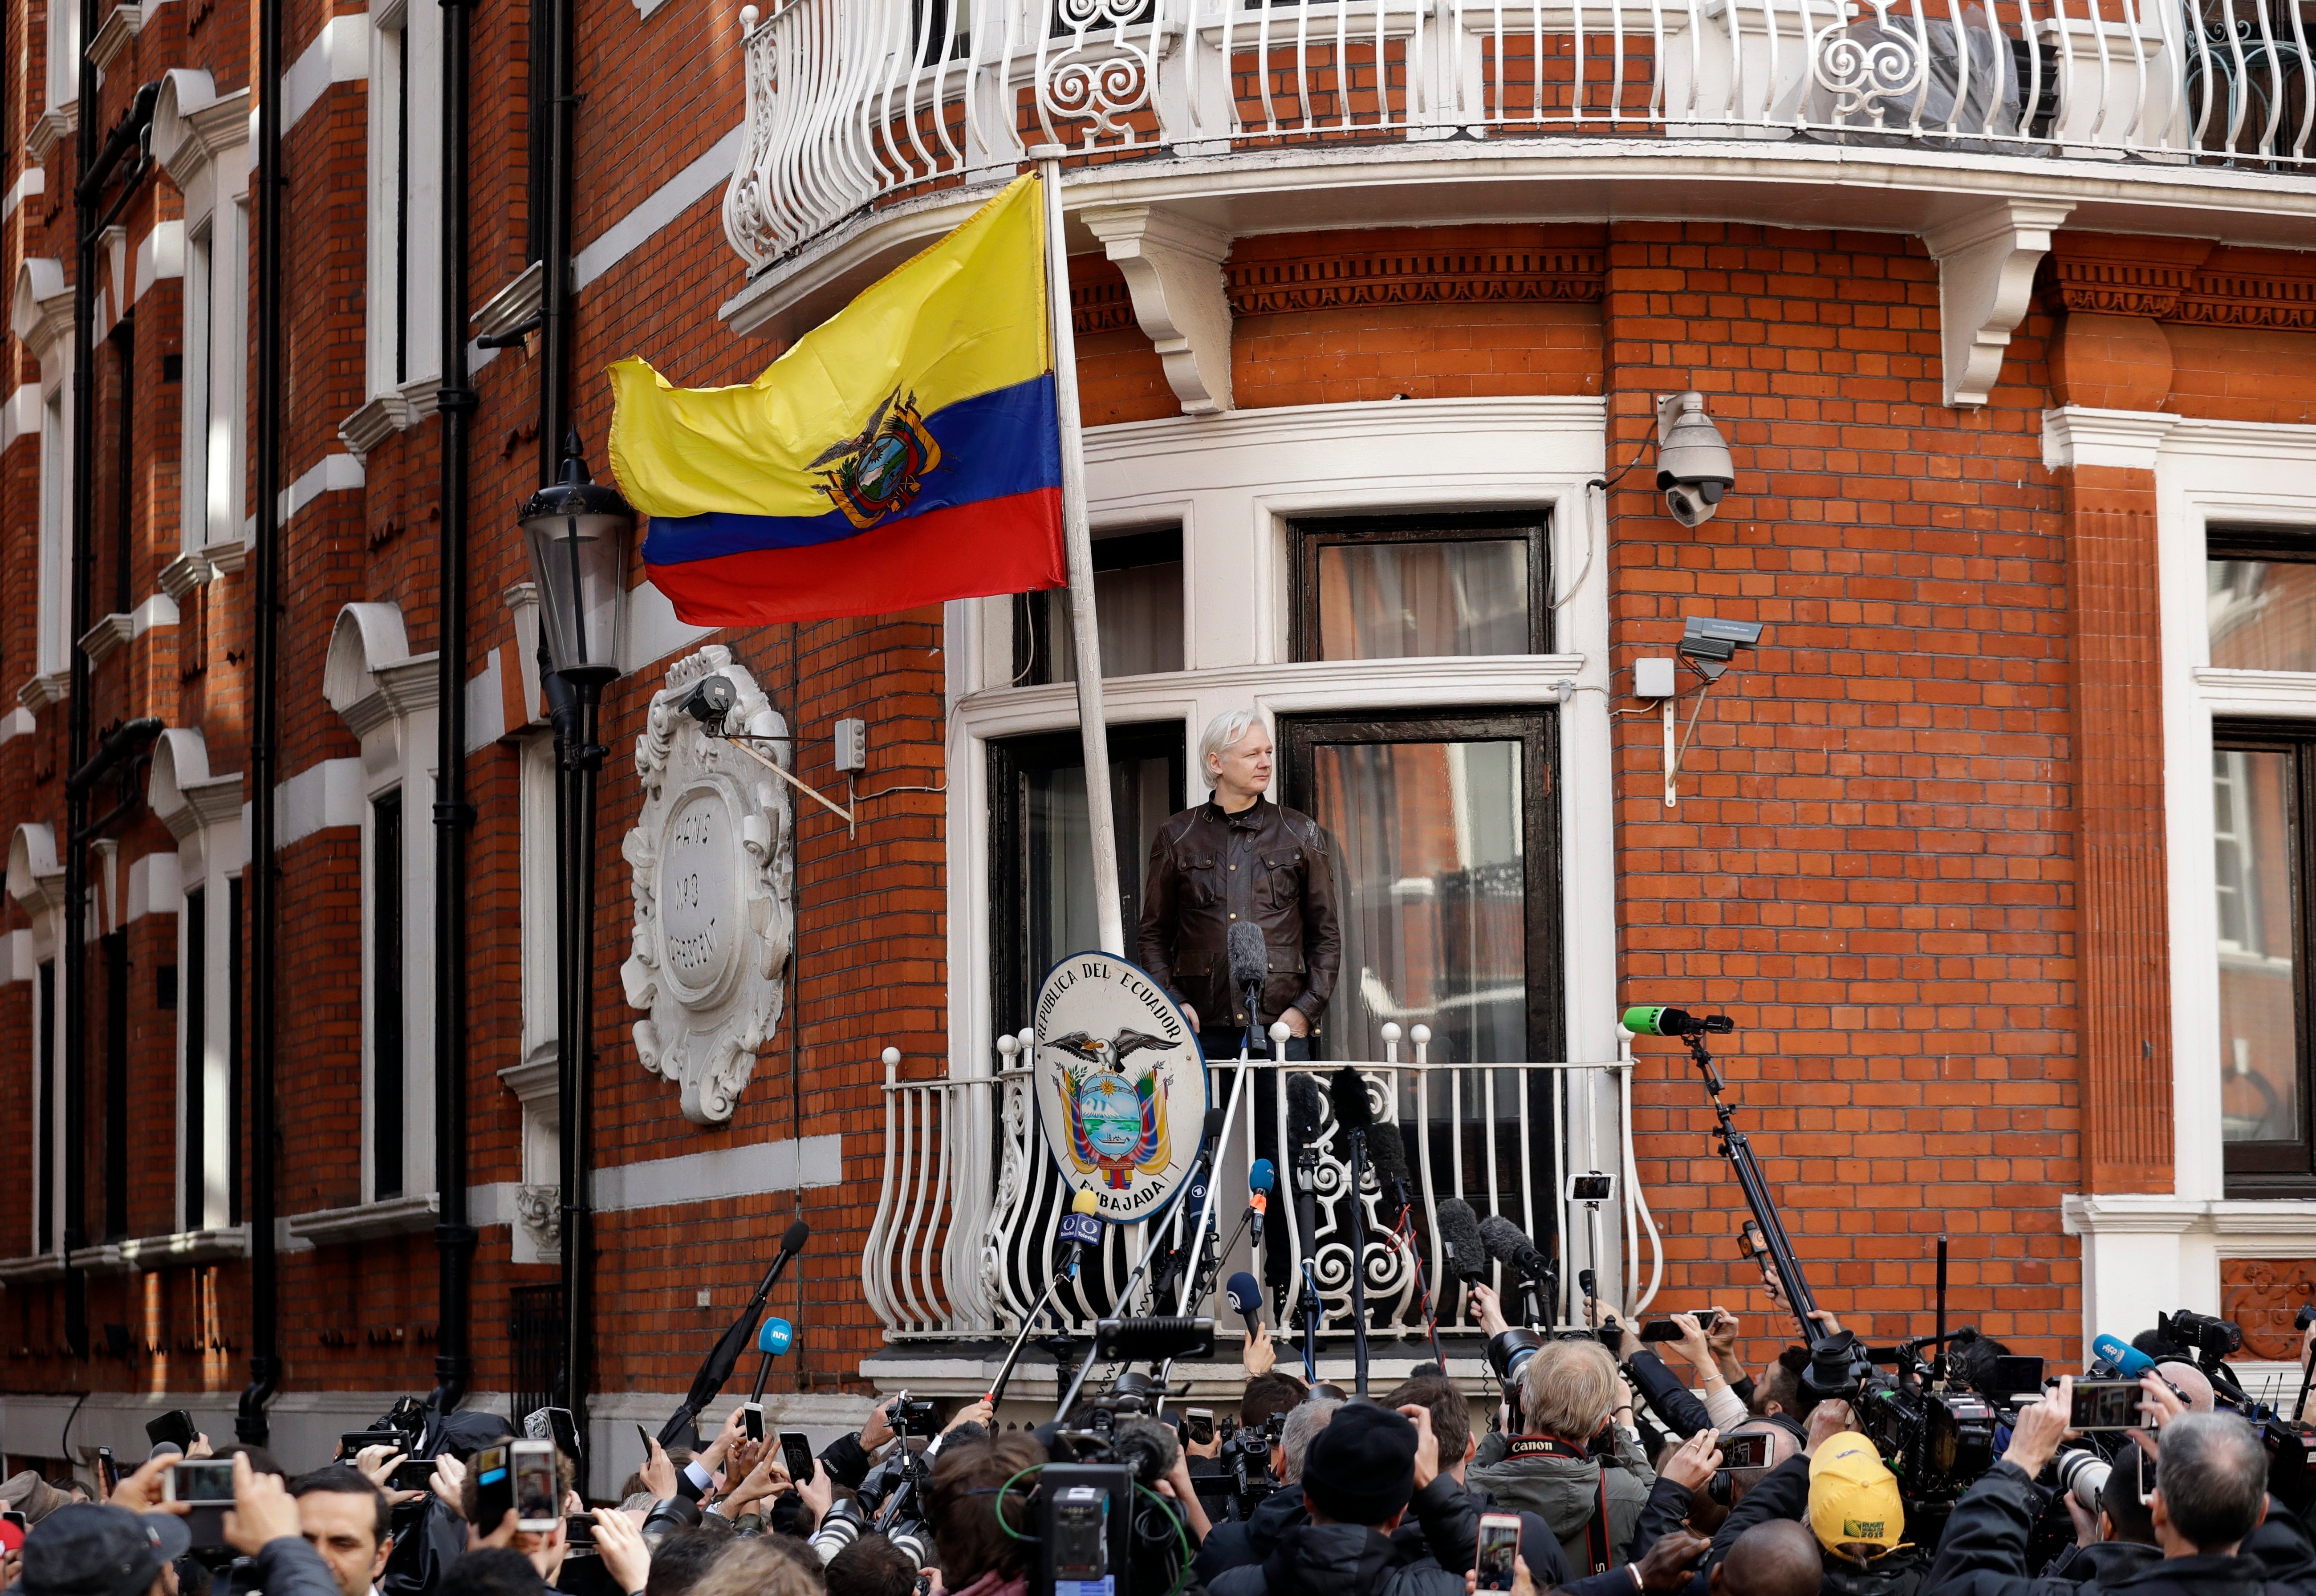 WikiLeaks founder Julian Assange gestures on the balcony of the Ecuadorian embassy